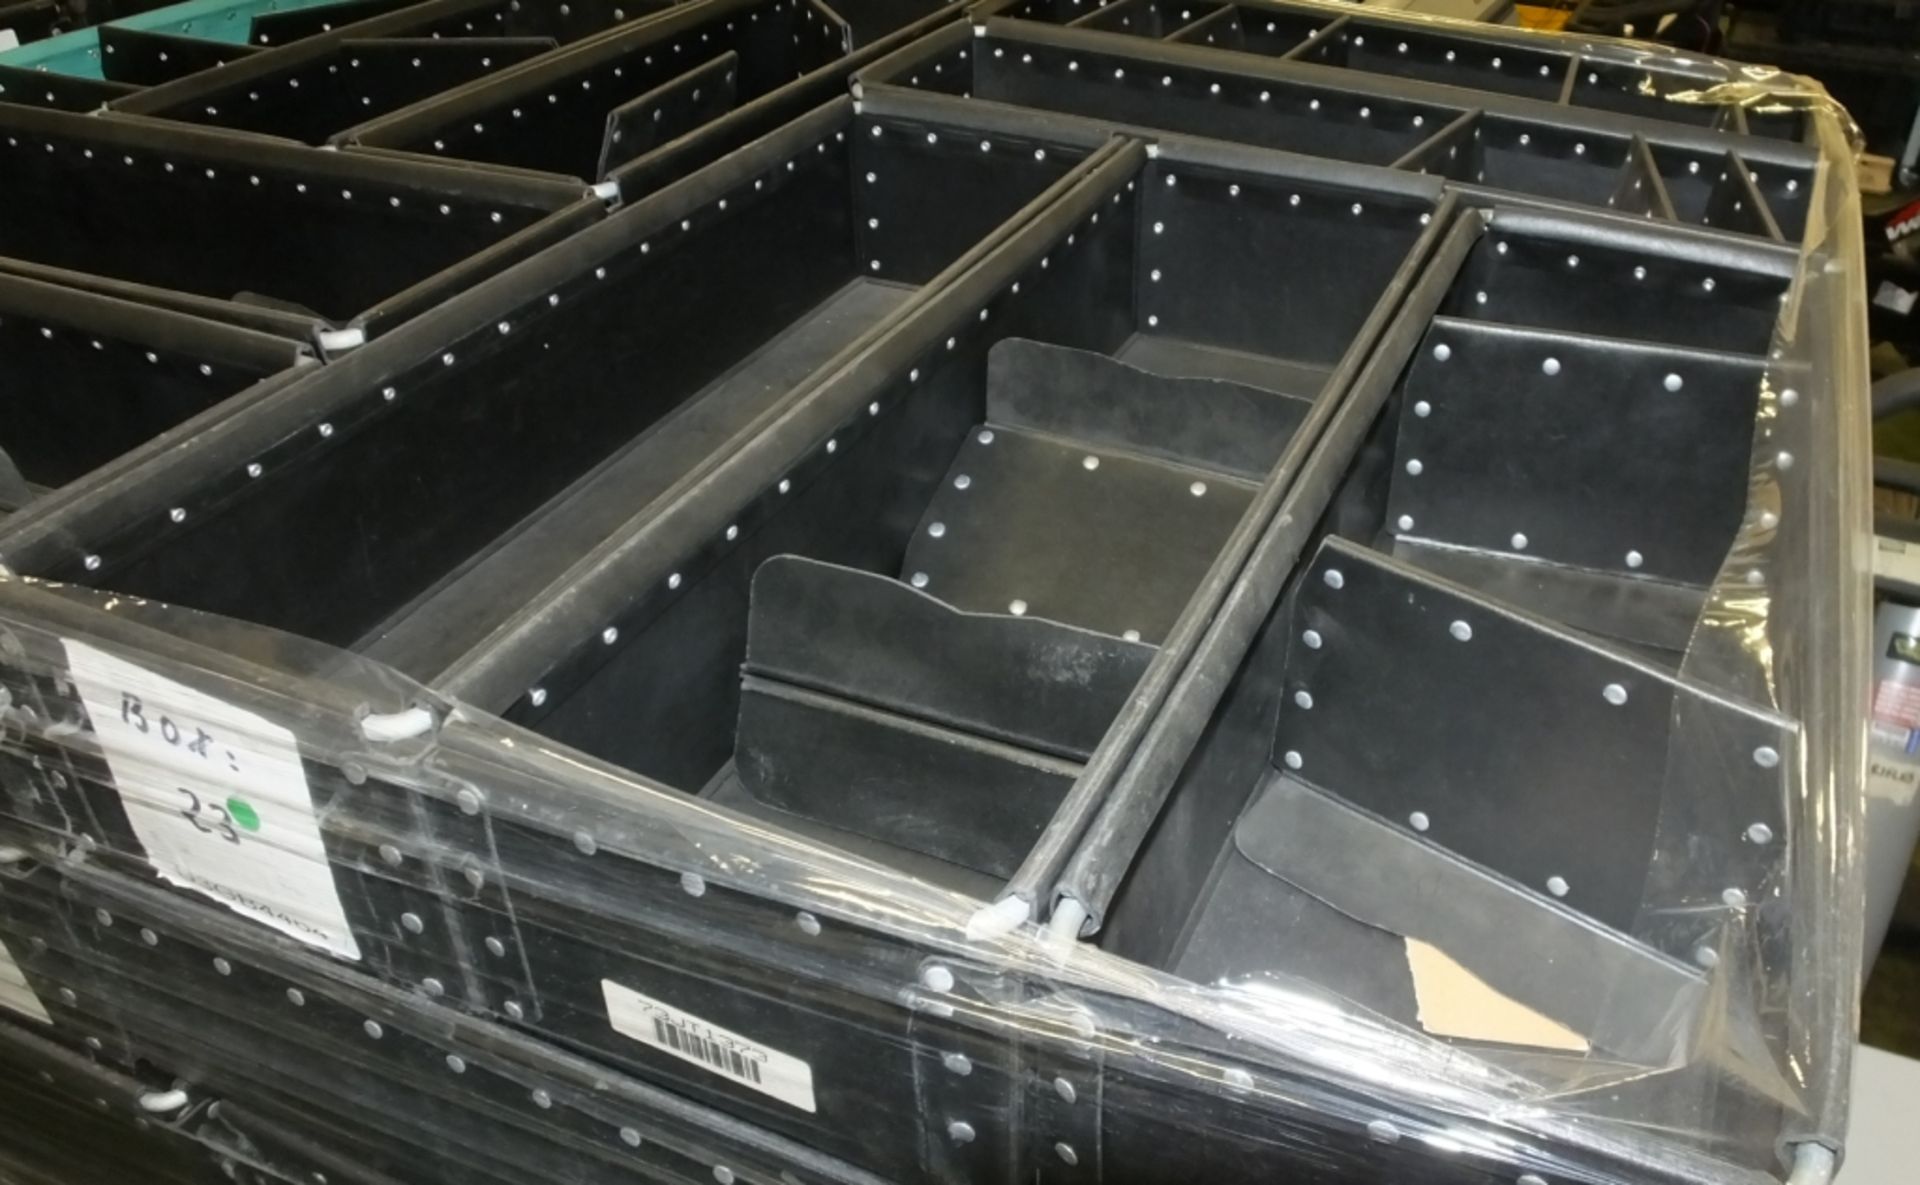 120x Fibreboard storage boxes / trays - Image 2 of 2